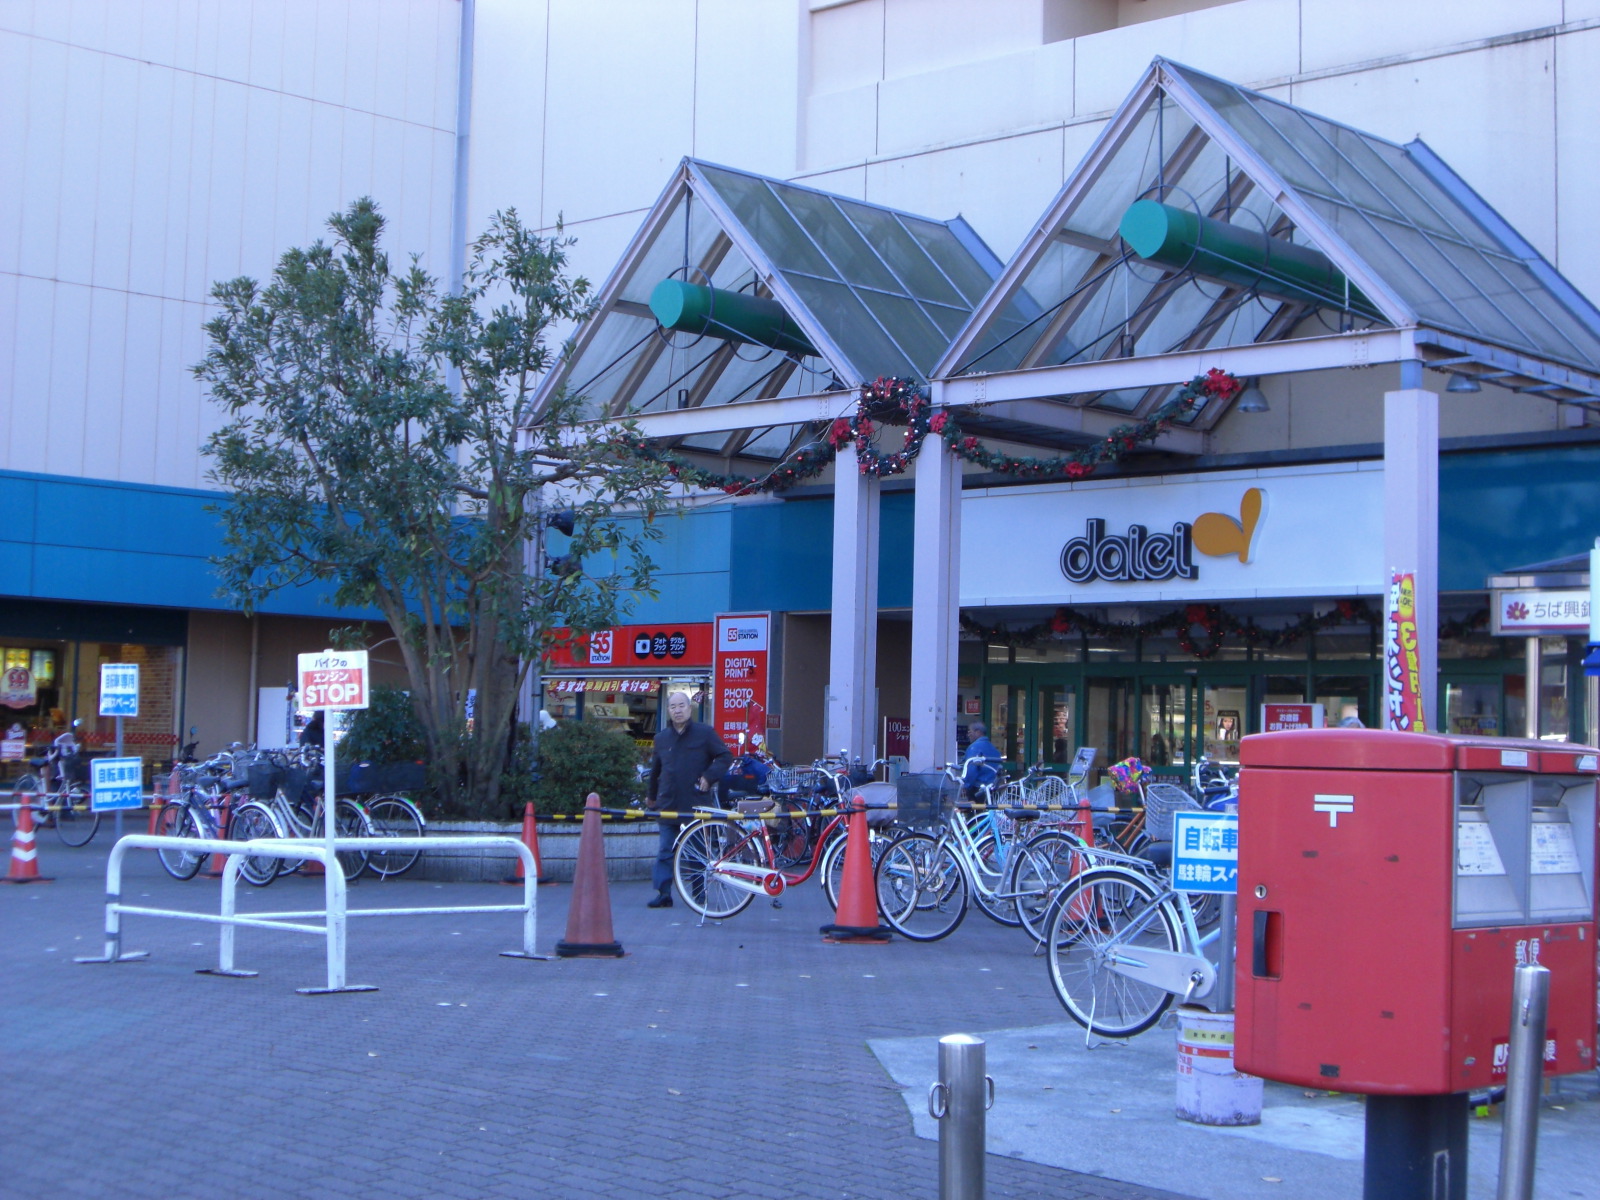 Supermarket. 569m to Daiei Matsudo store (Super)